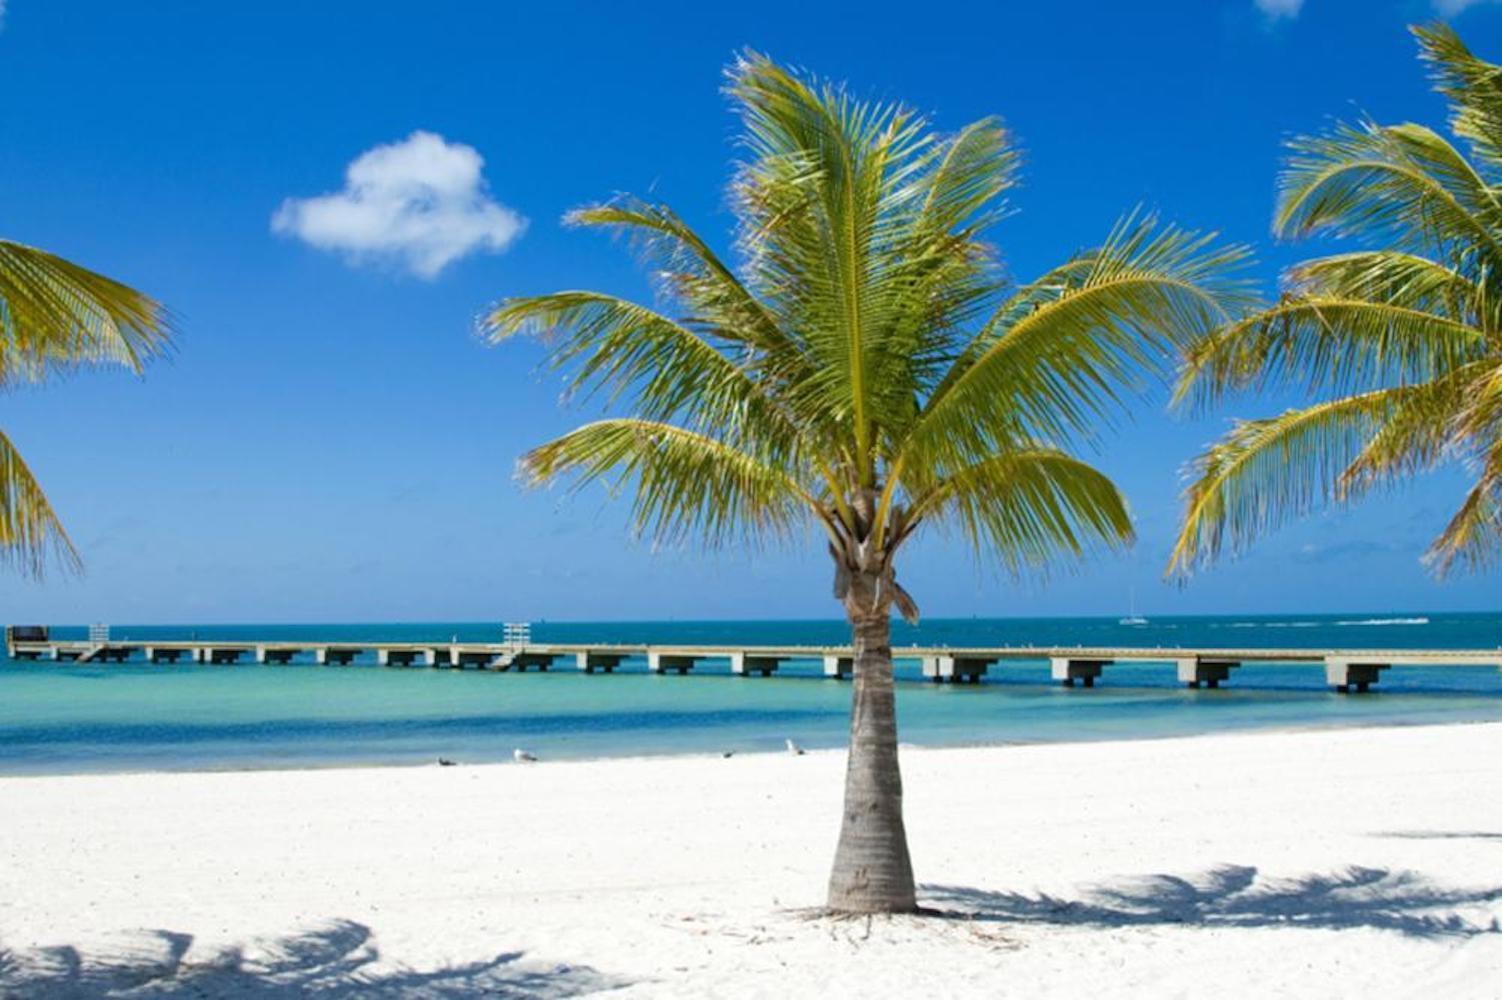 Live Near Amazing Beaches! Peaceful Port Charlotte, FLORIDA!